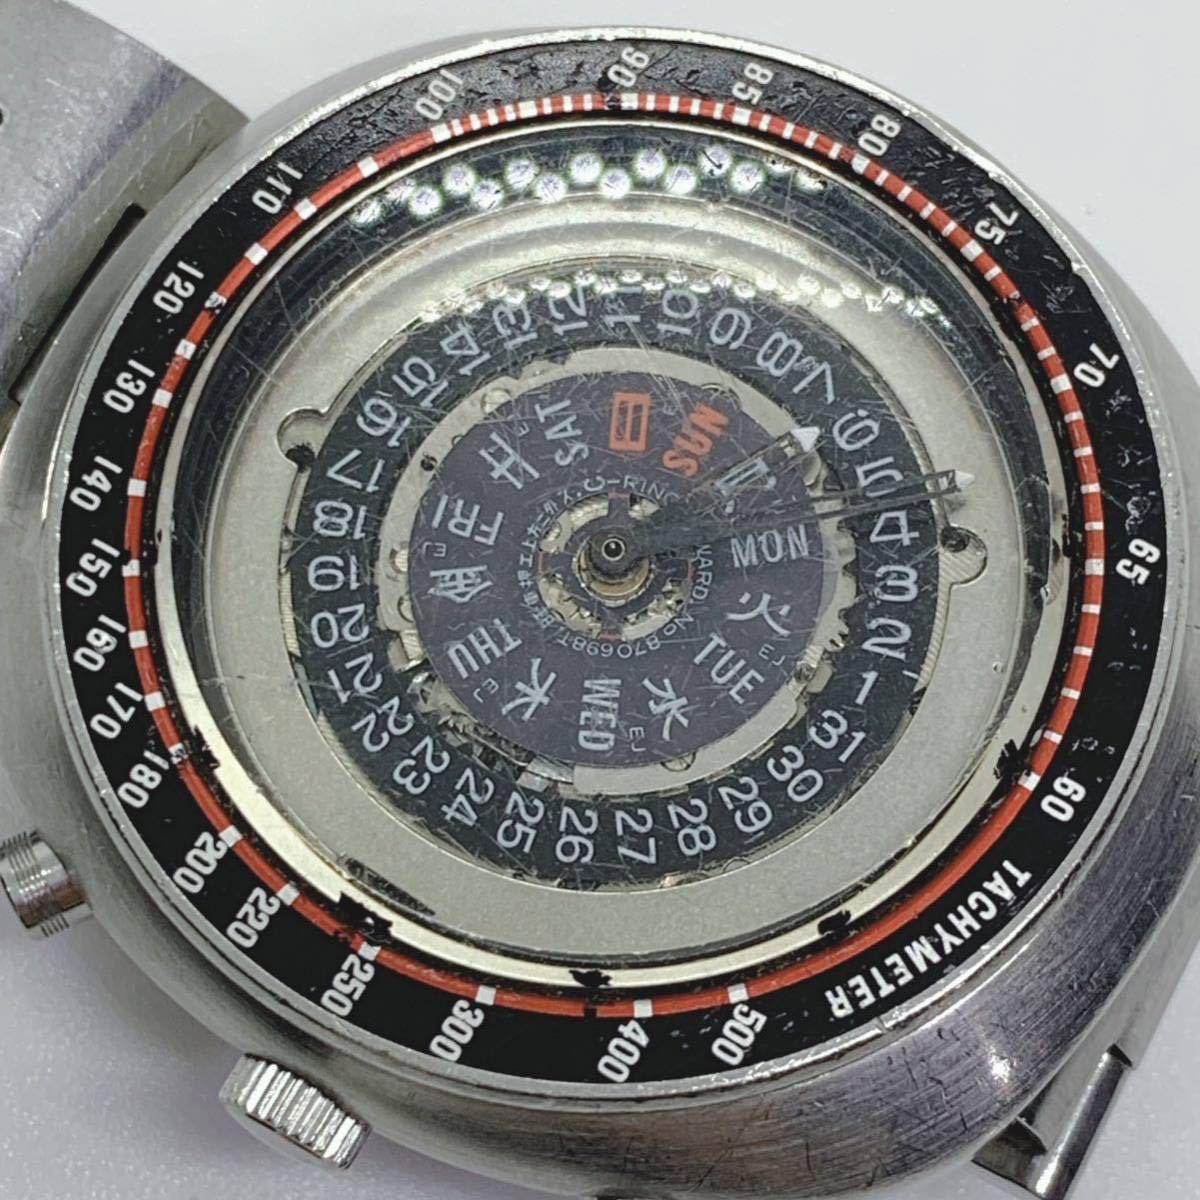 SEIKO セイコー 腕時計 5SPORTS 5スポーツ 6138-0011 スピードタイマー 自動巻き 文字盤欠品 不動品 ジャンク_画像3